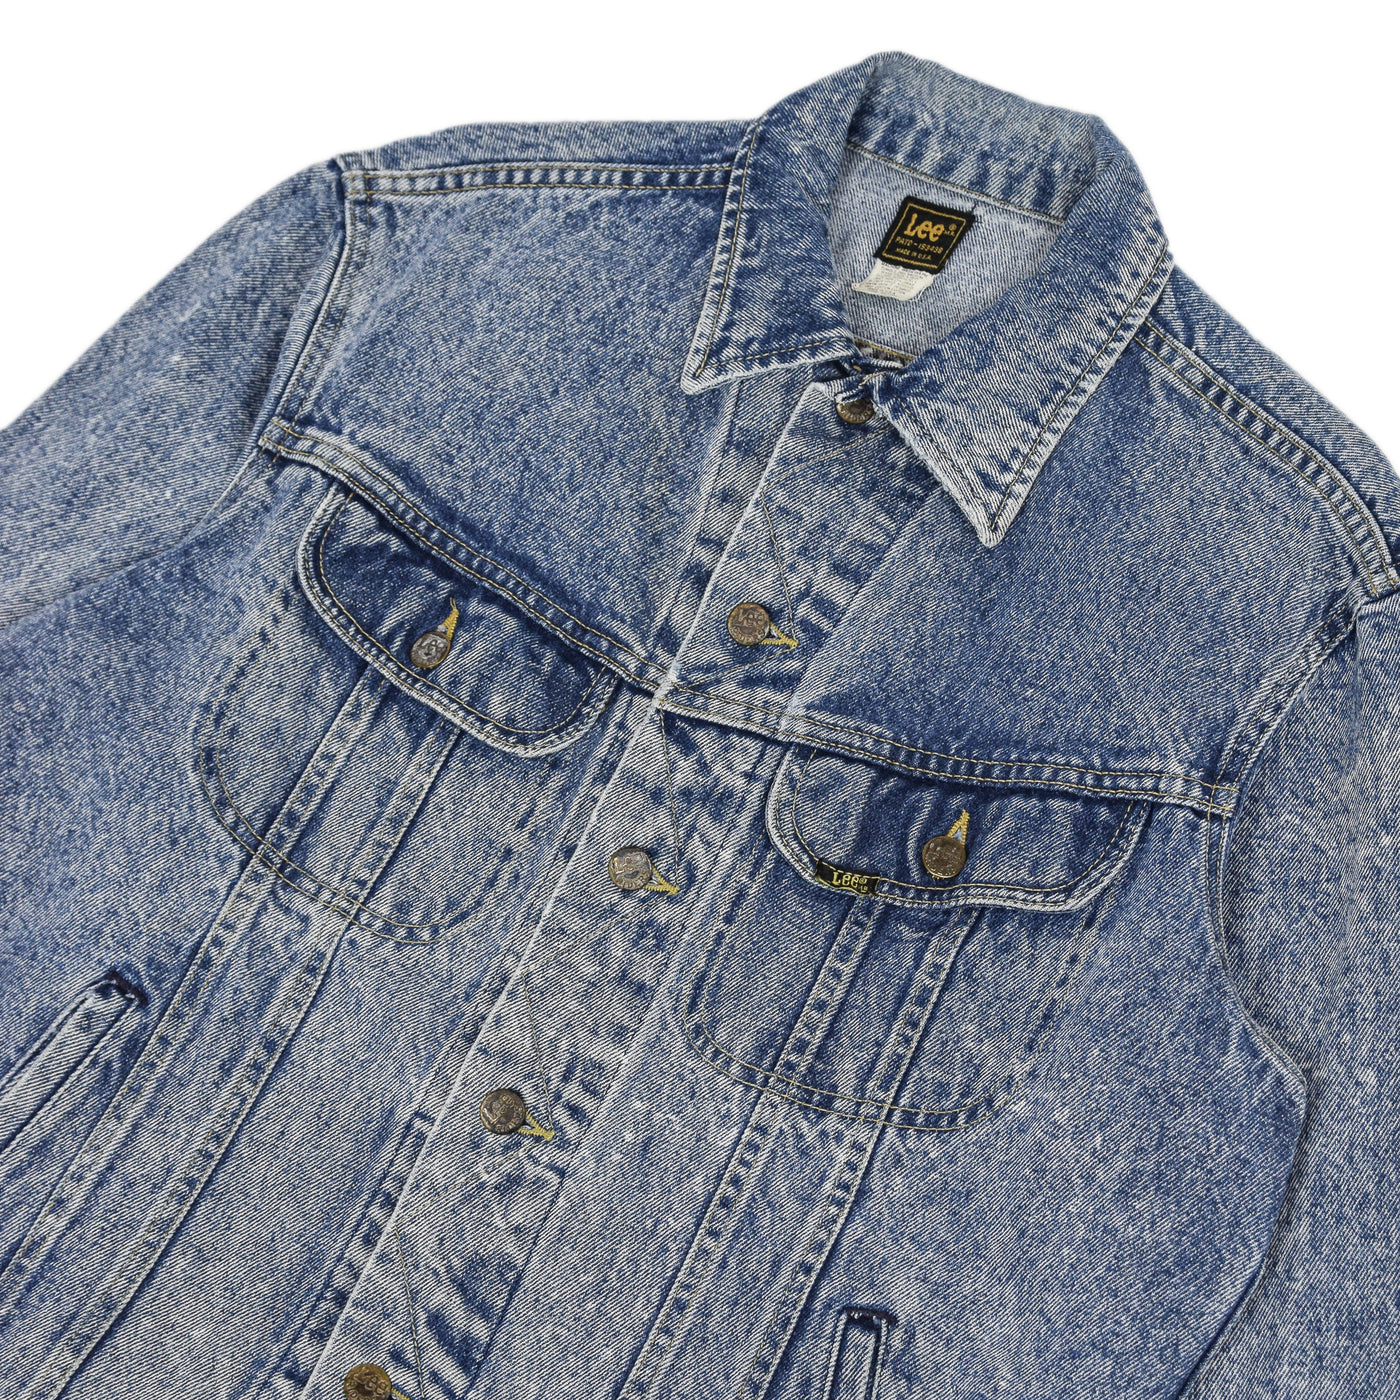 Vintage 70s Lee Riders Stonewash Blue Denim Trucker Style Jacket Made in USA M chest